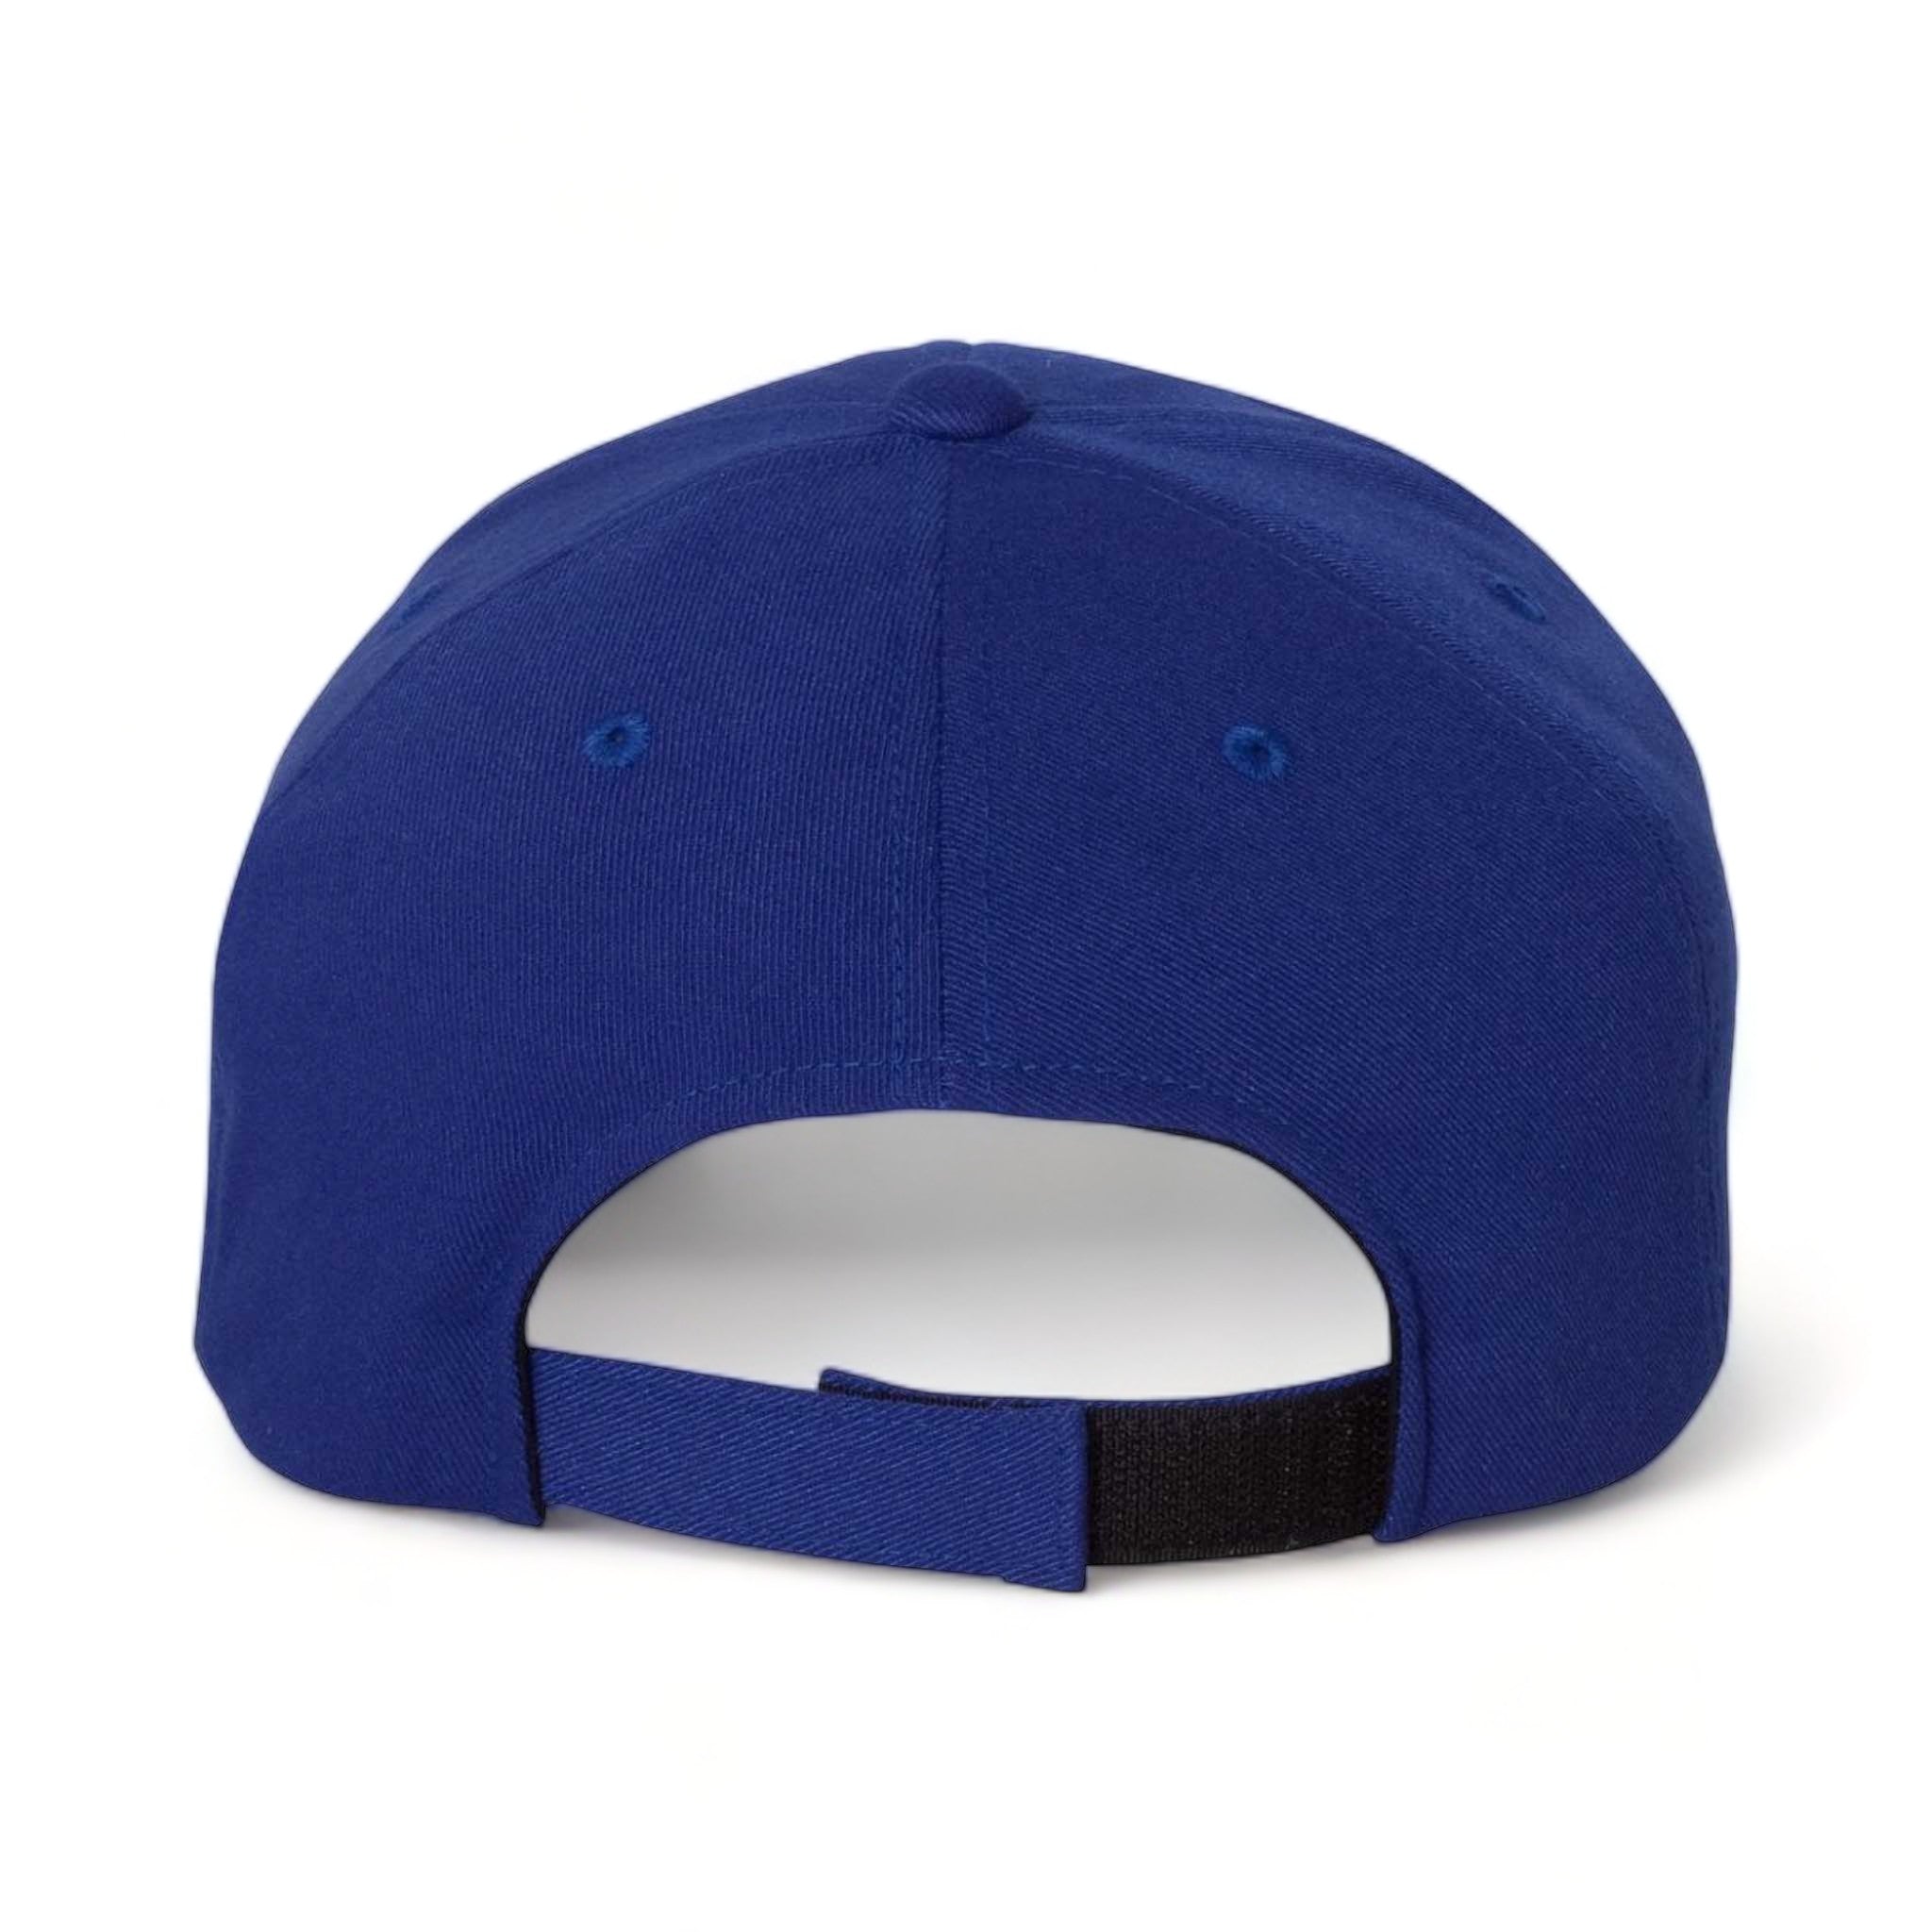 Back view of Flexfit 110C custom hat in royal blue